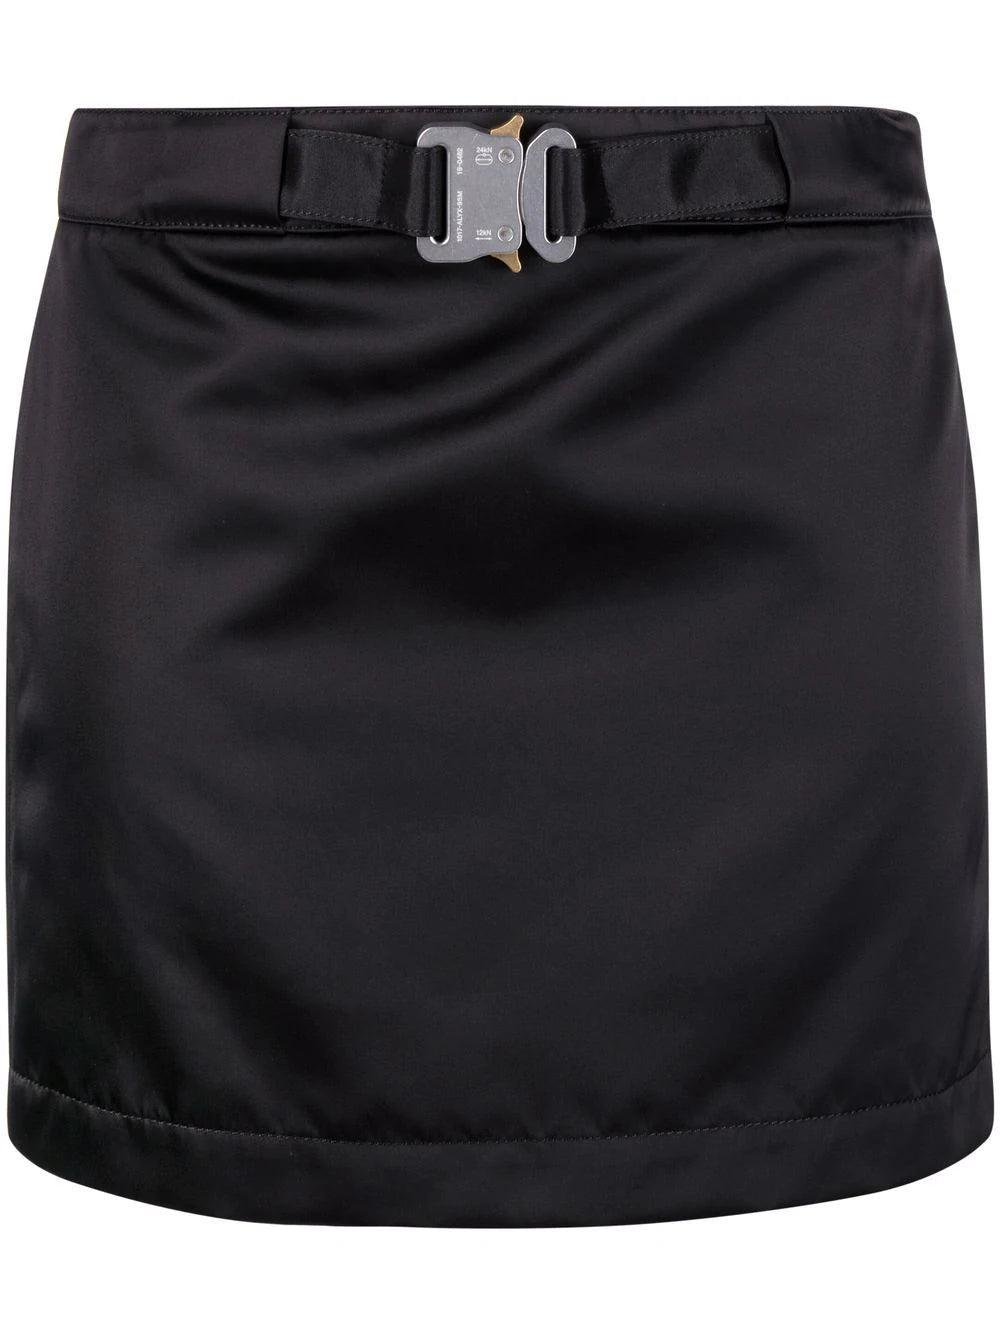 ALYX - Women's Buckle Nylon Satin Skirt by ALYX